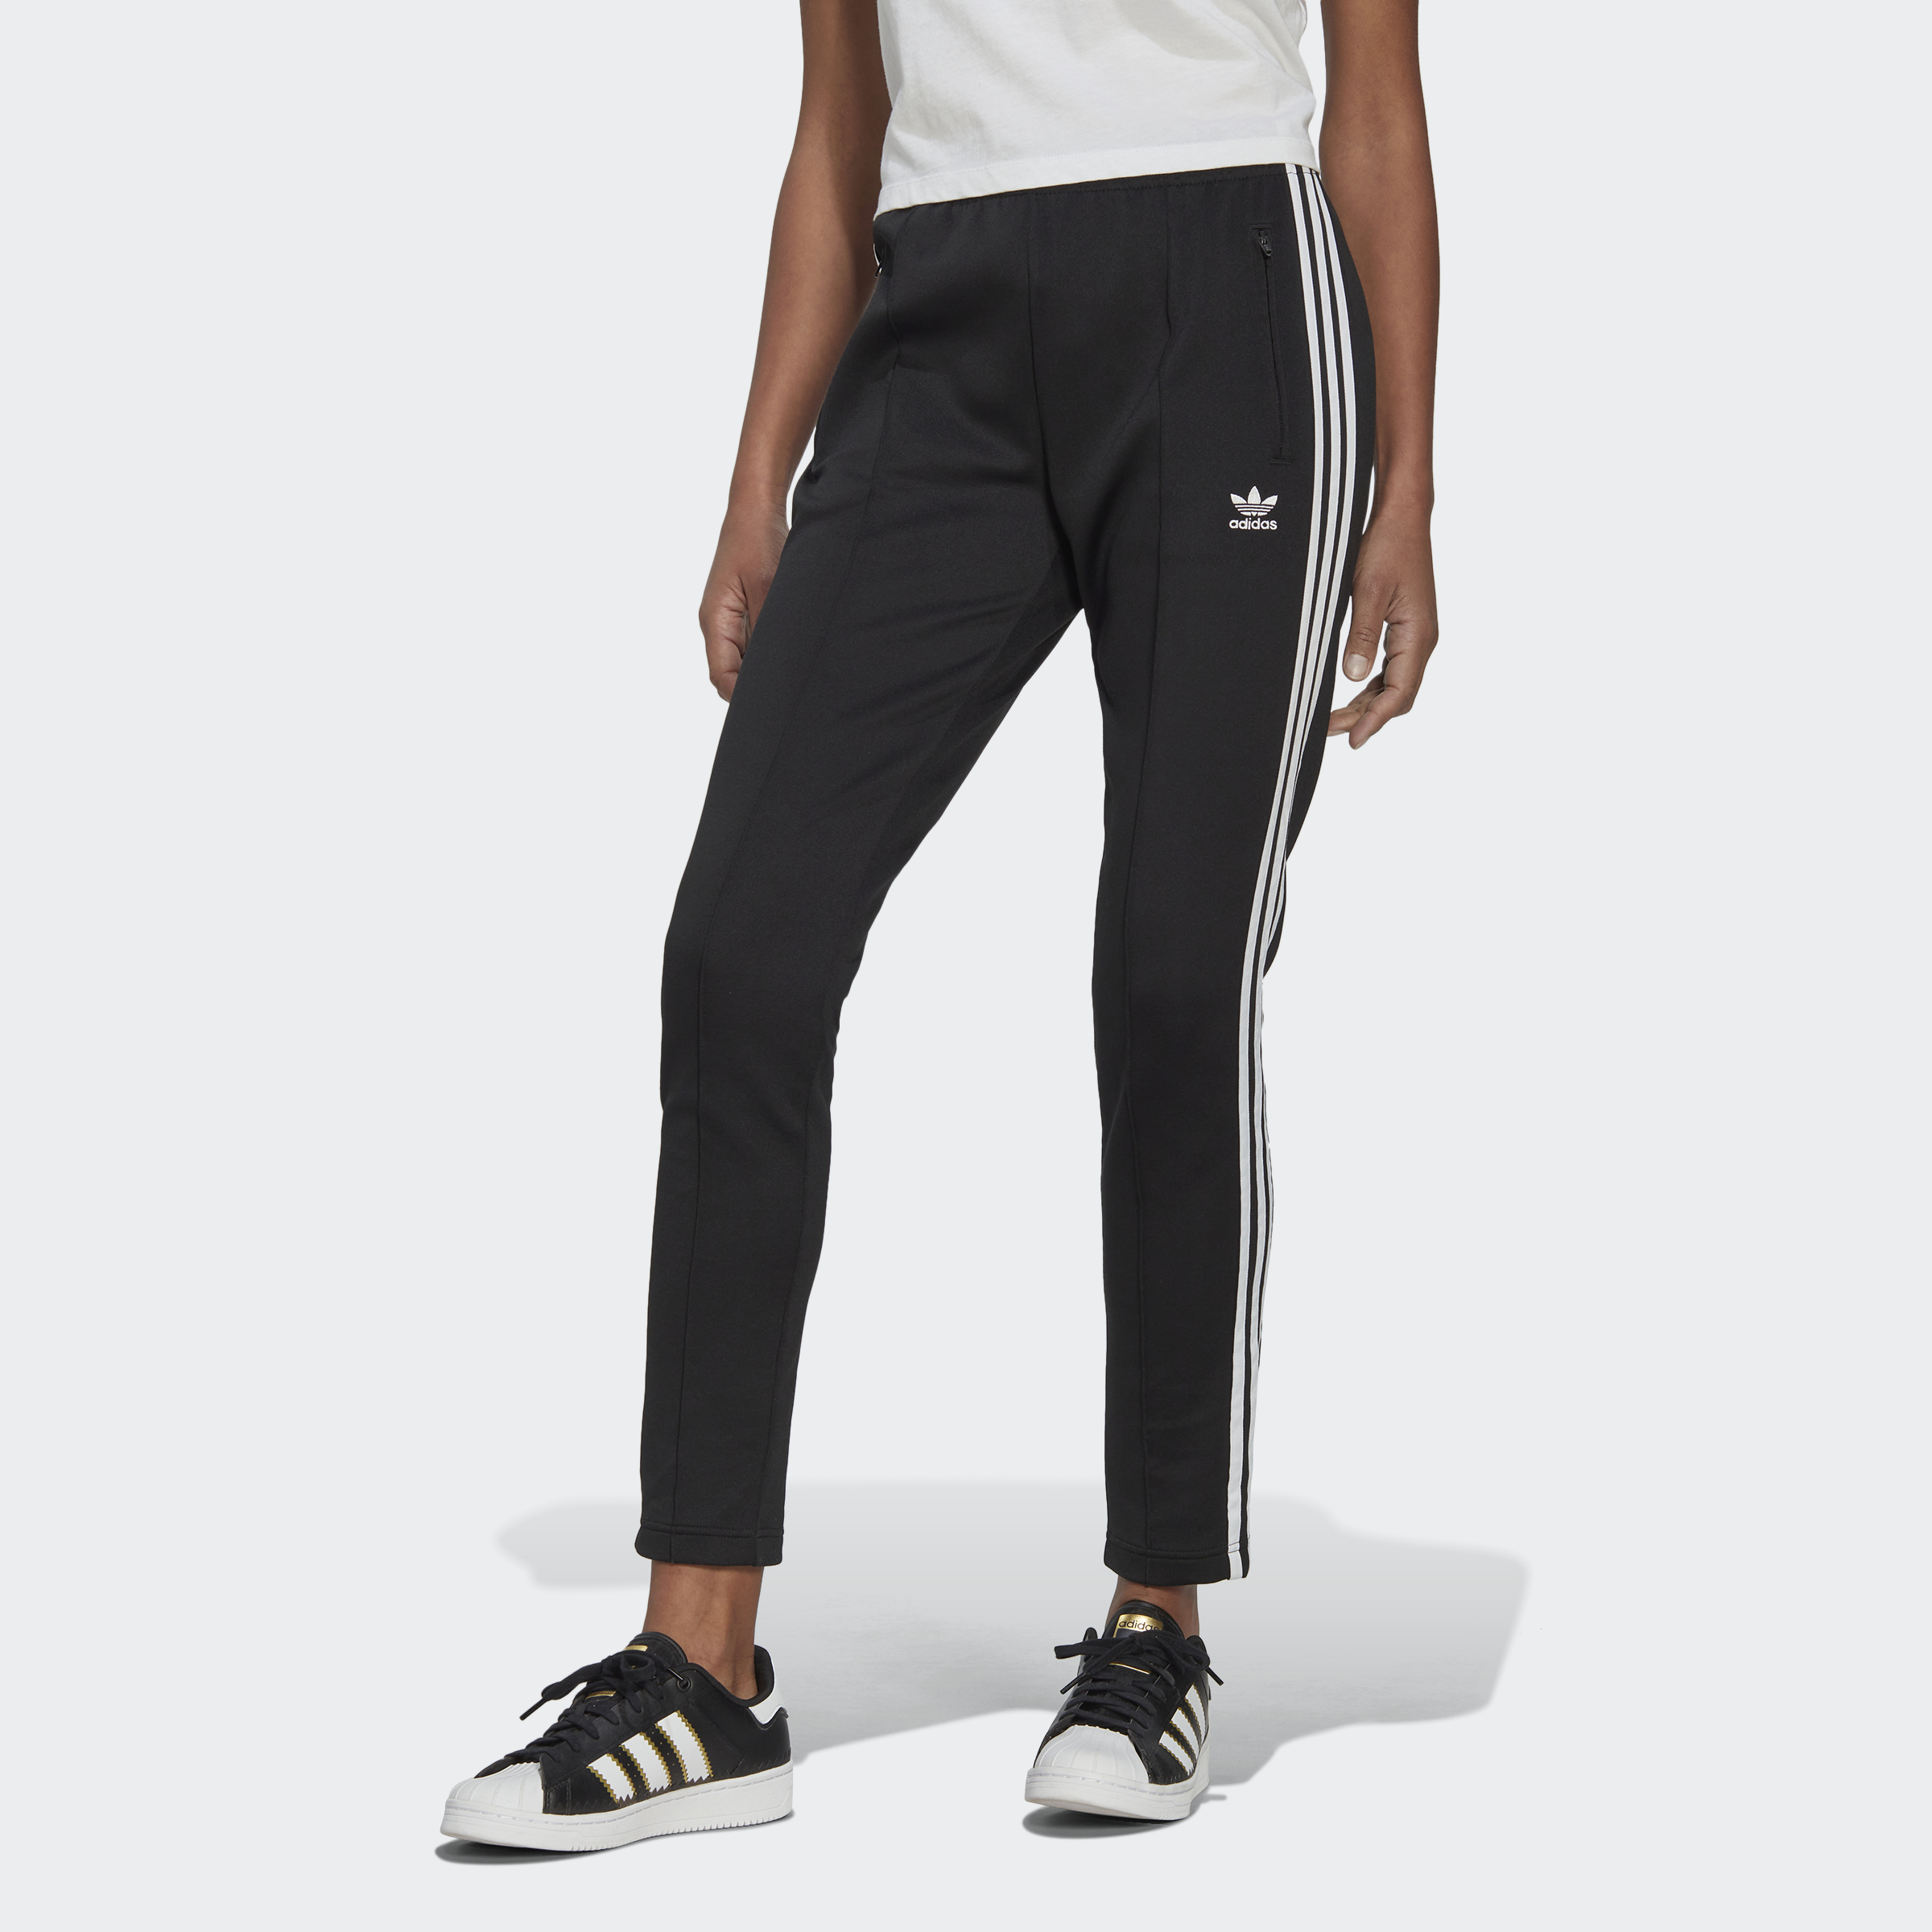 markering Postbode gids Women's Adidas Slim Fit Straight Leg Track Pant Size M - Black/White for  sale online | eBay